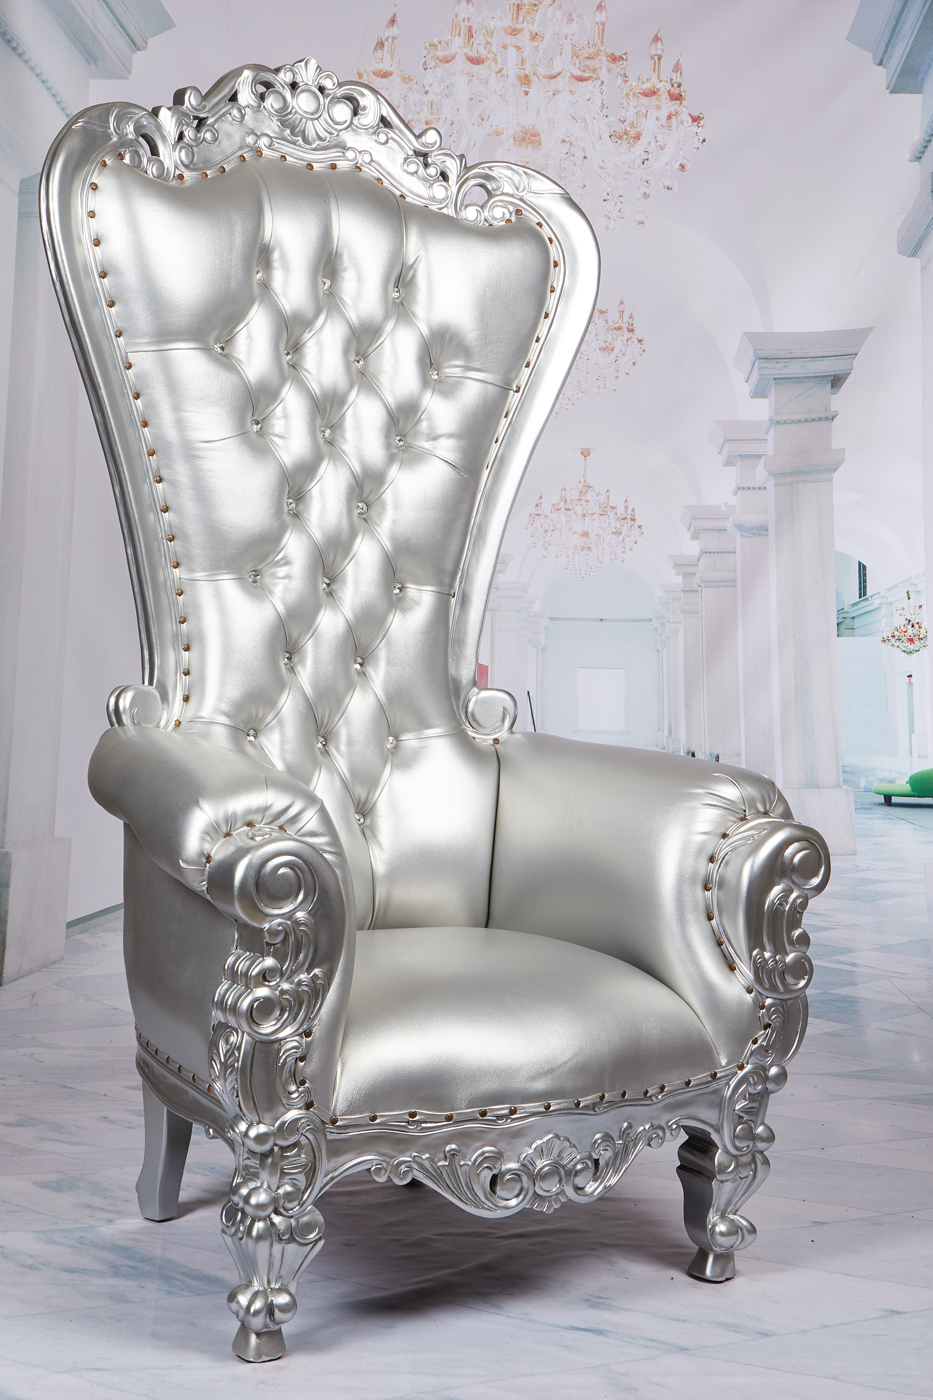 Tiffany High Back Party Throne Chair Kingqueen Wedding Throne Chair